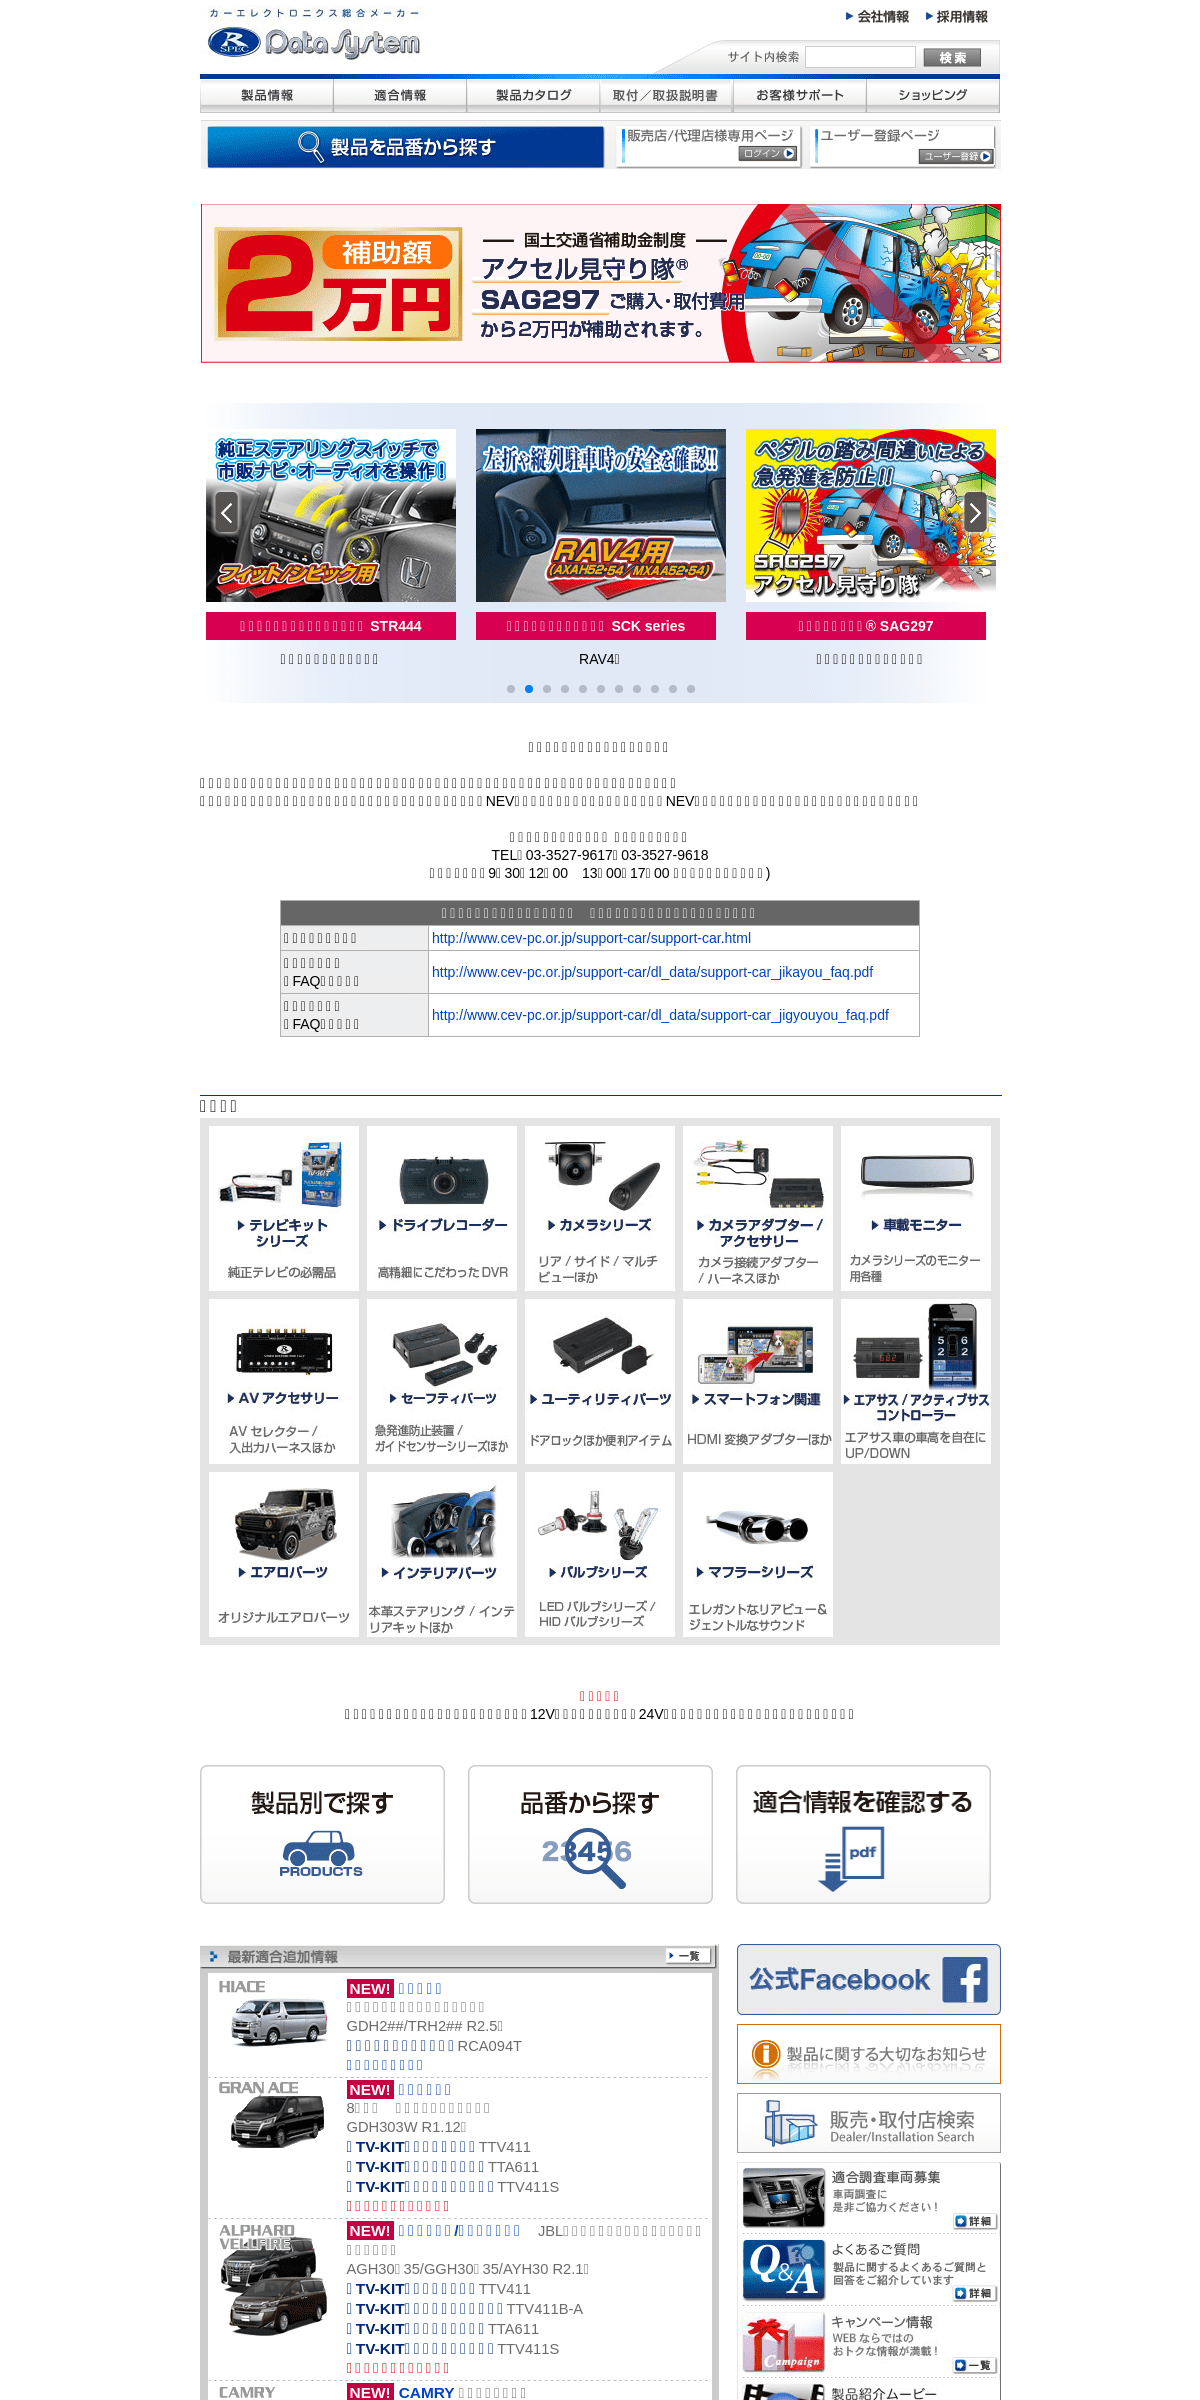 A complete backup of datasystem.co.jp